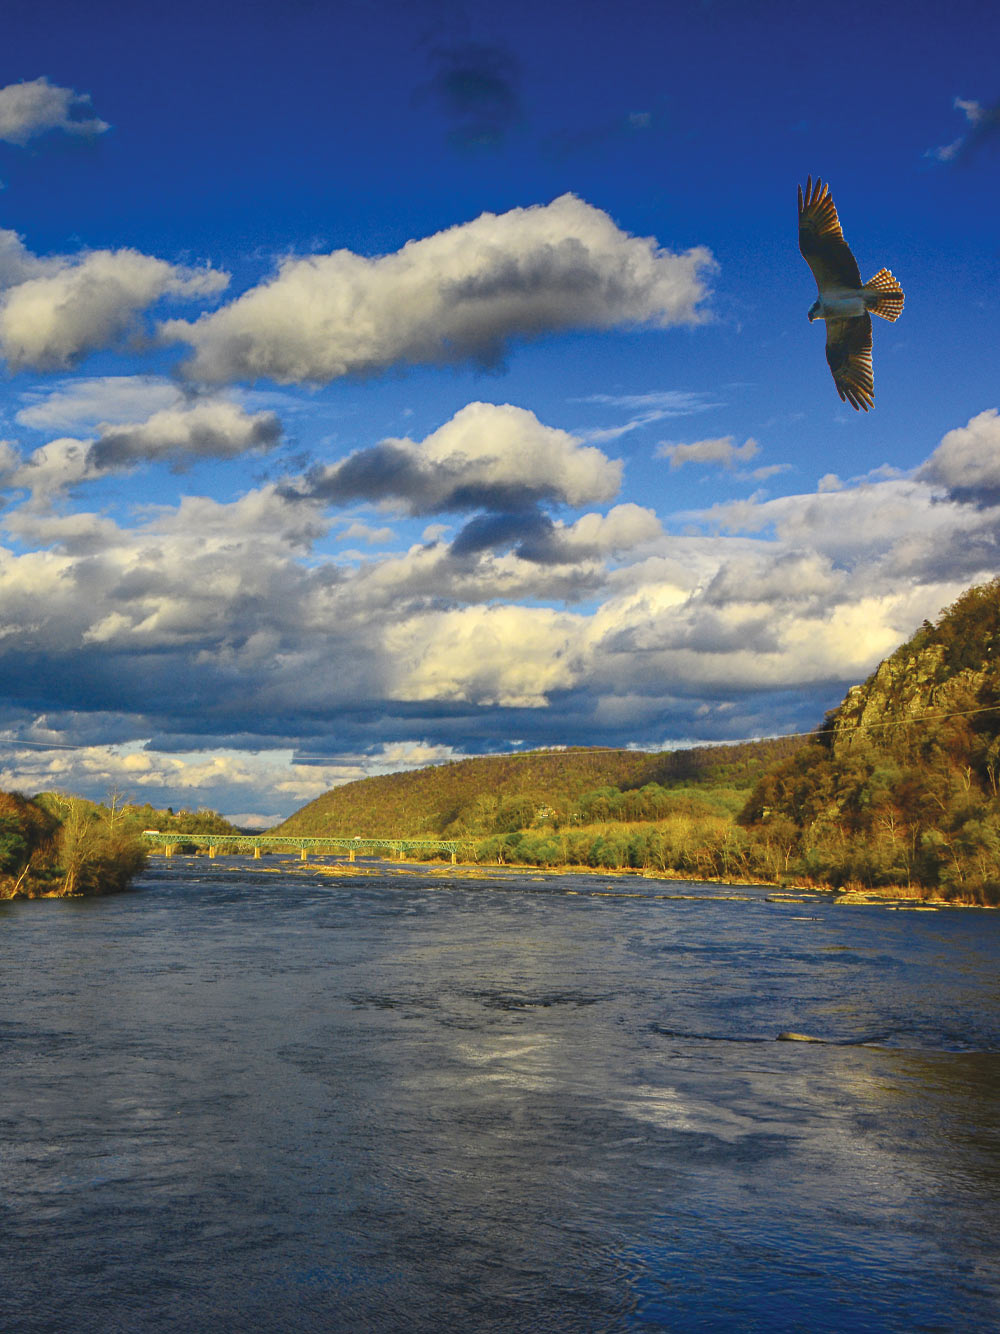 eagle flying over a river